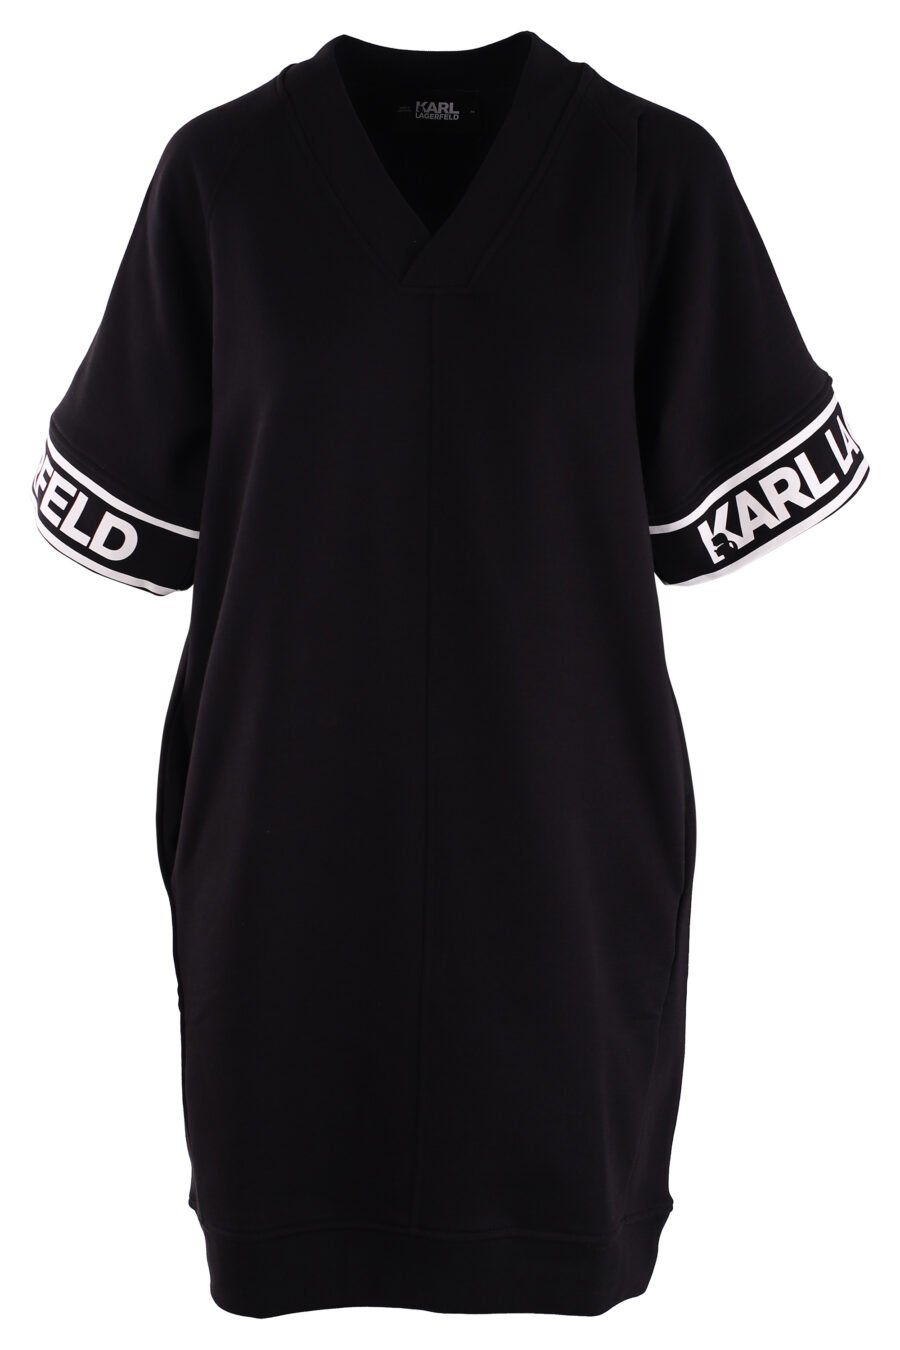 Black dress with logo on sleeves - IMG 3047